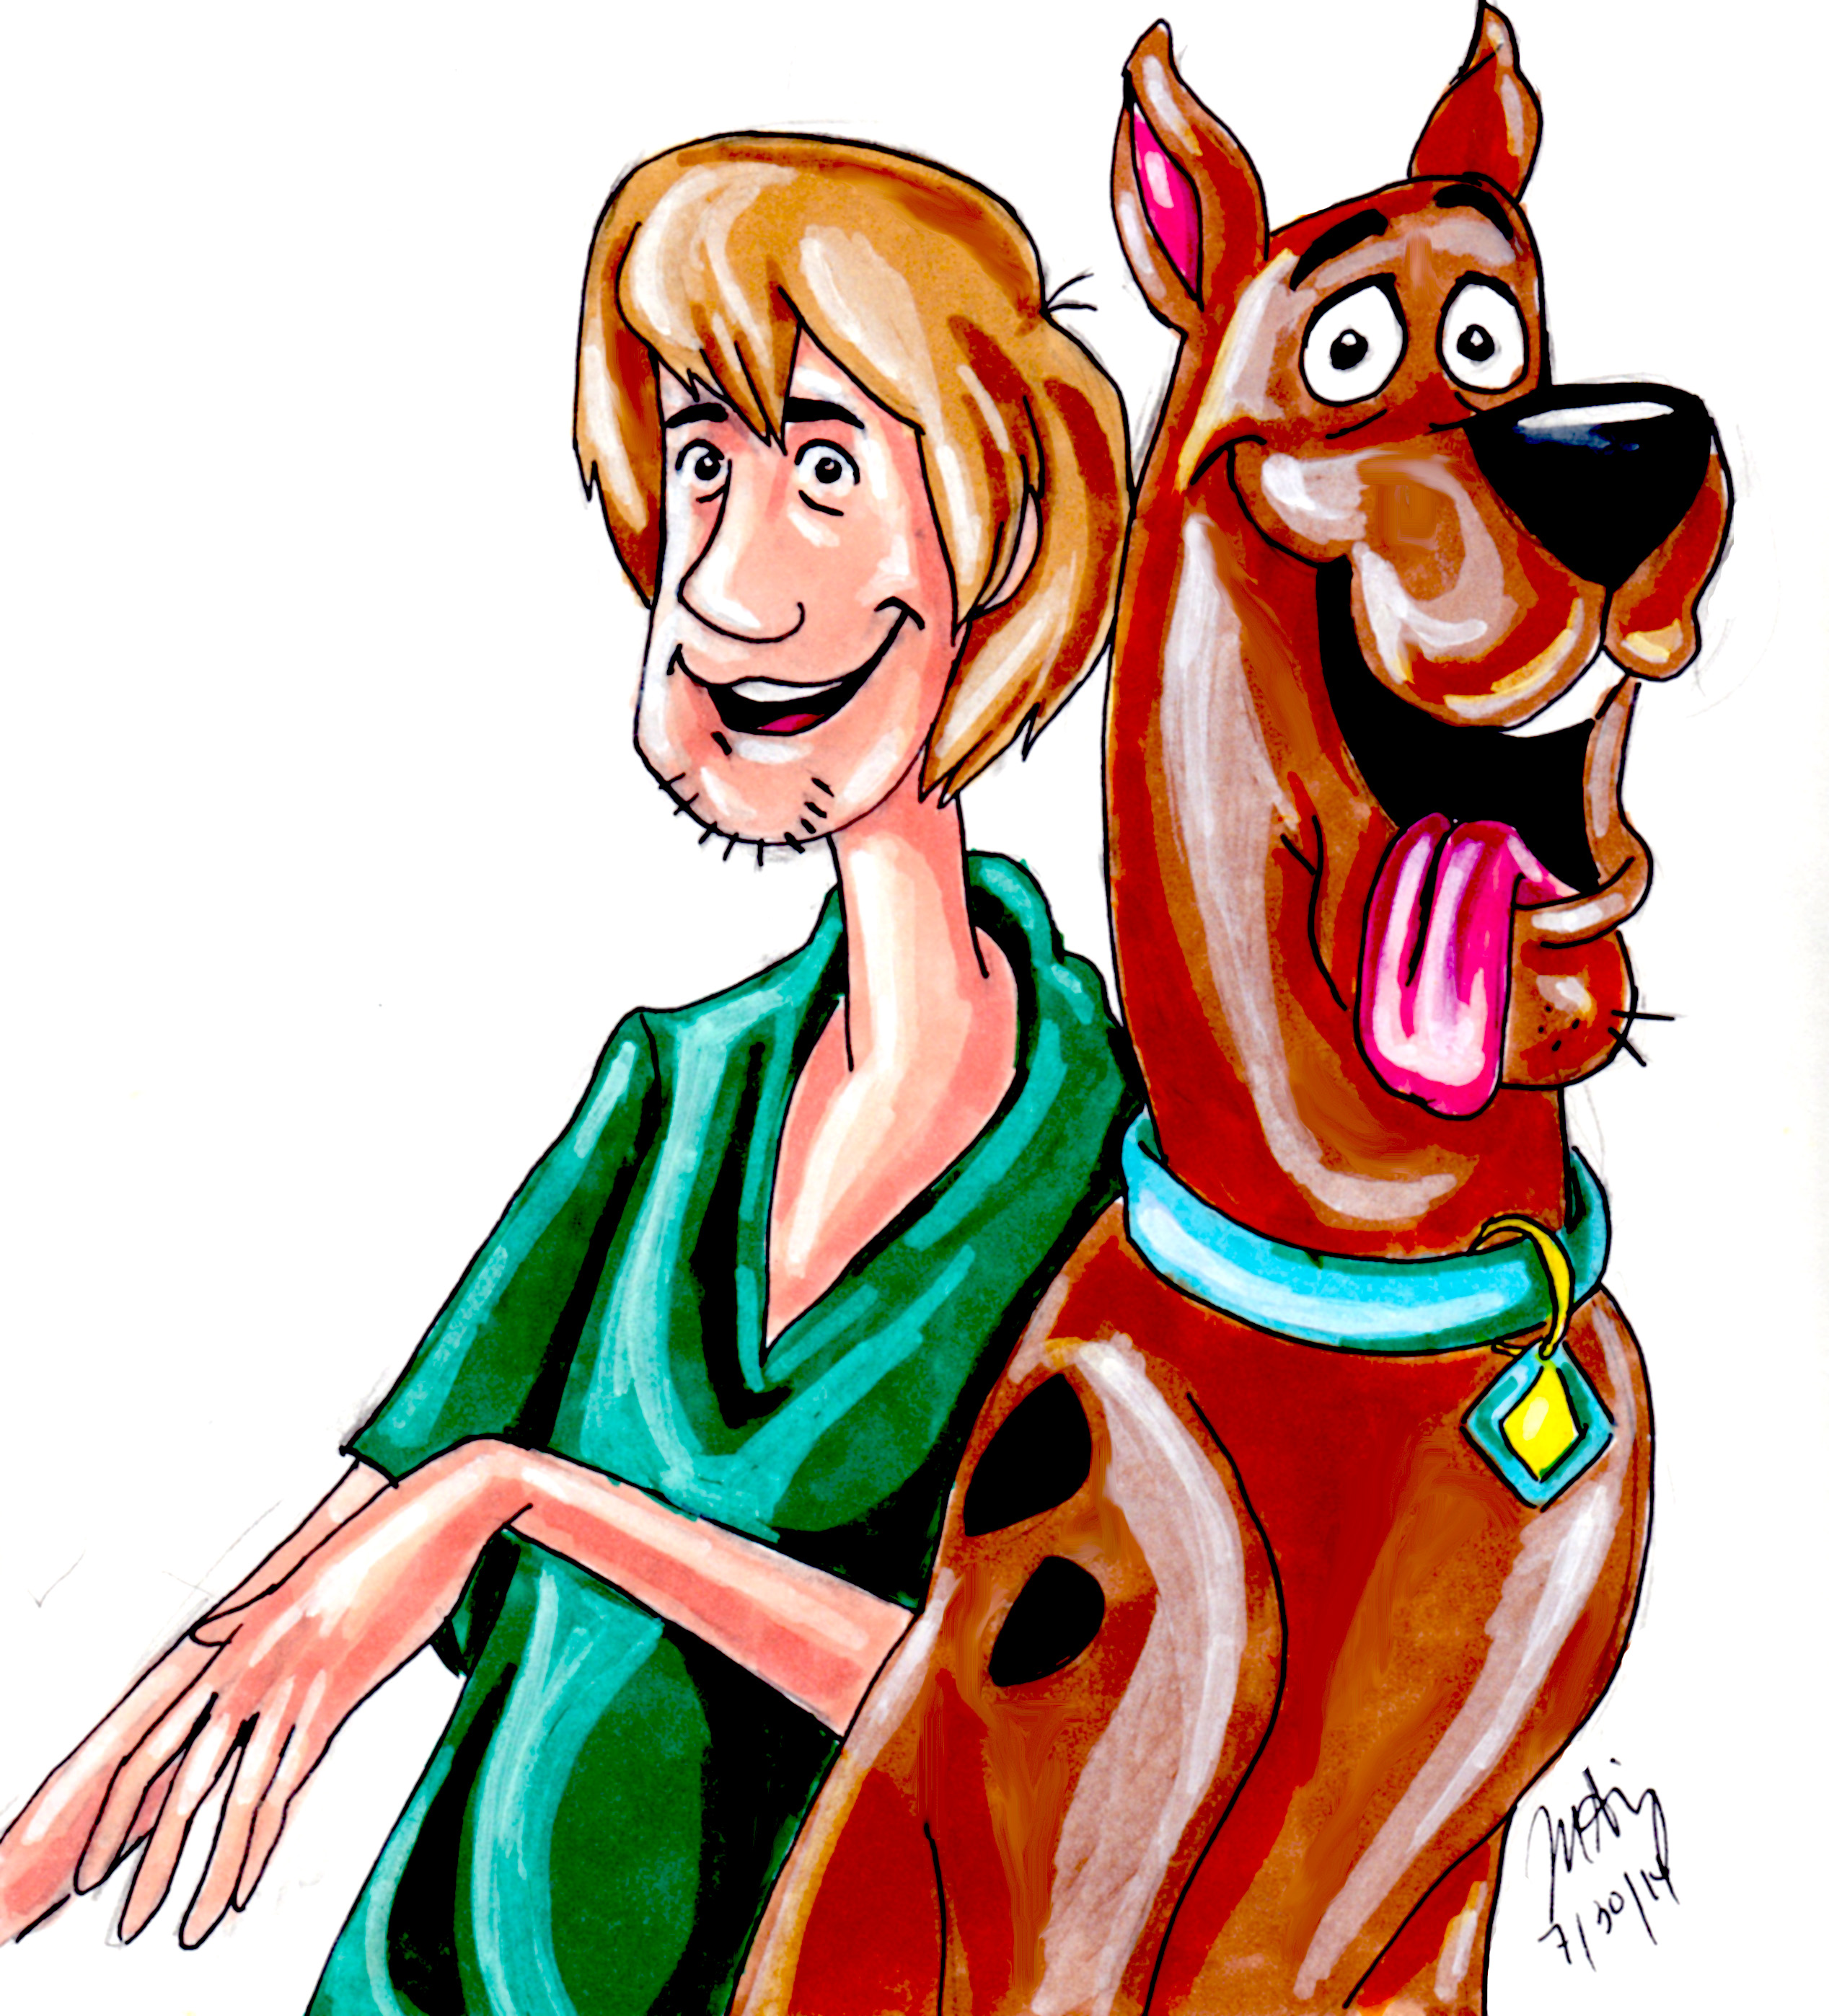 Fan Art of Shaggy and Scooby for fans of bizarremoon. http://pythonorbit.de...